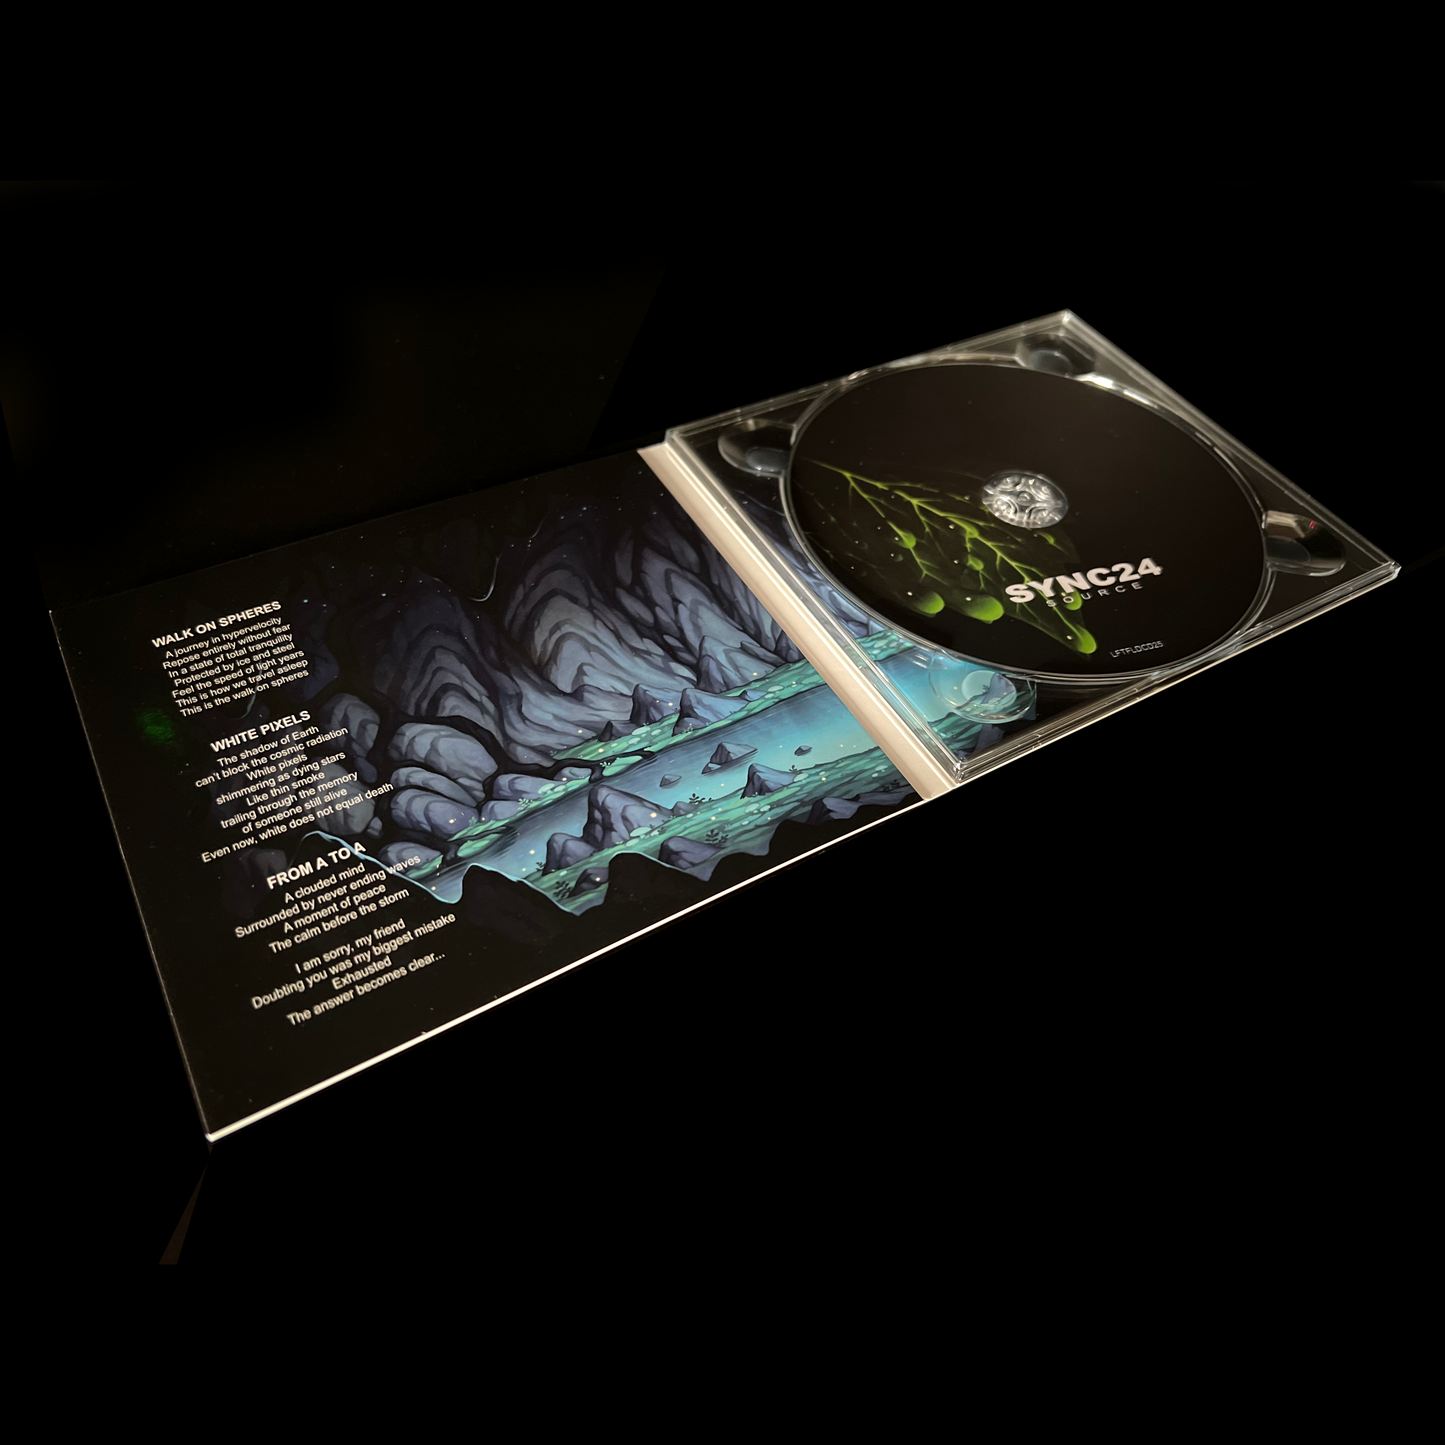 Sync24 - Source 2022 Remaster CD - 4 panel Digipack